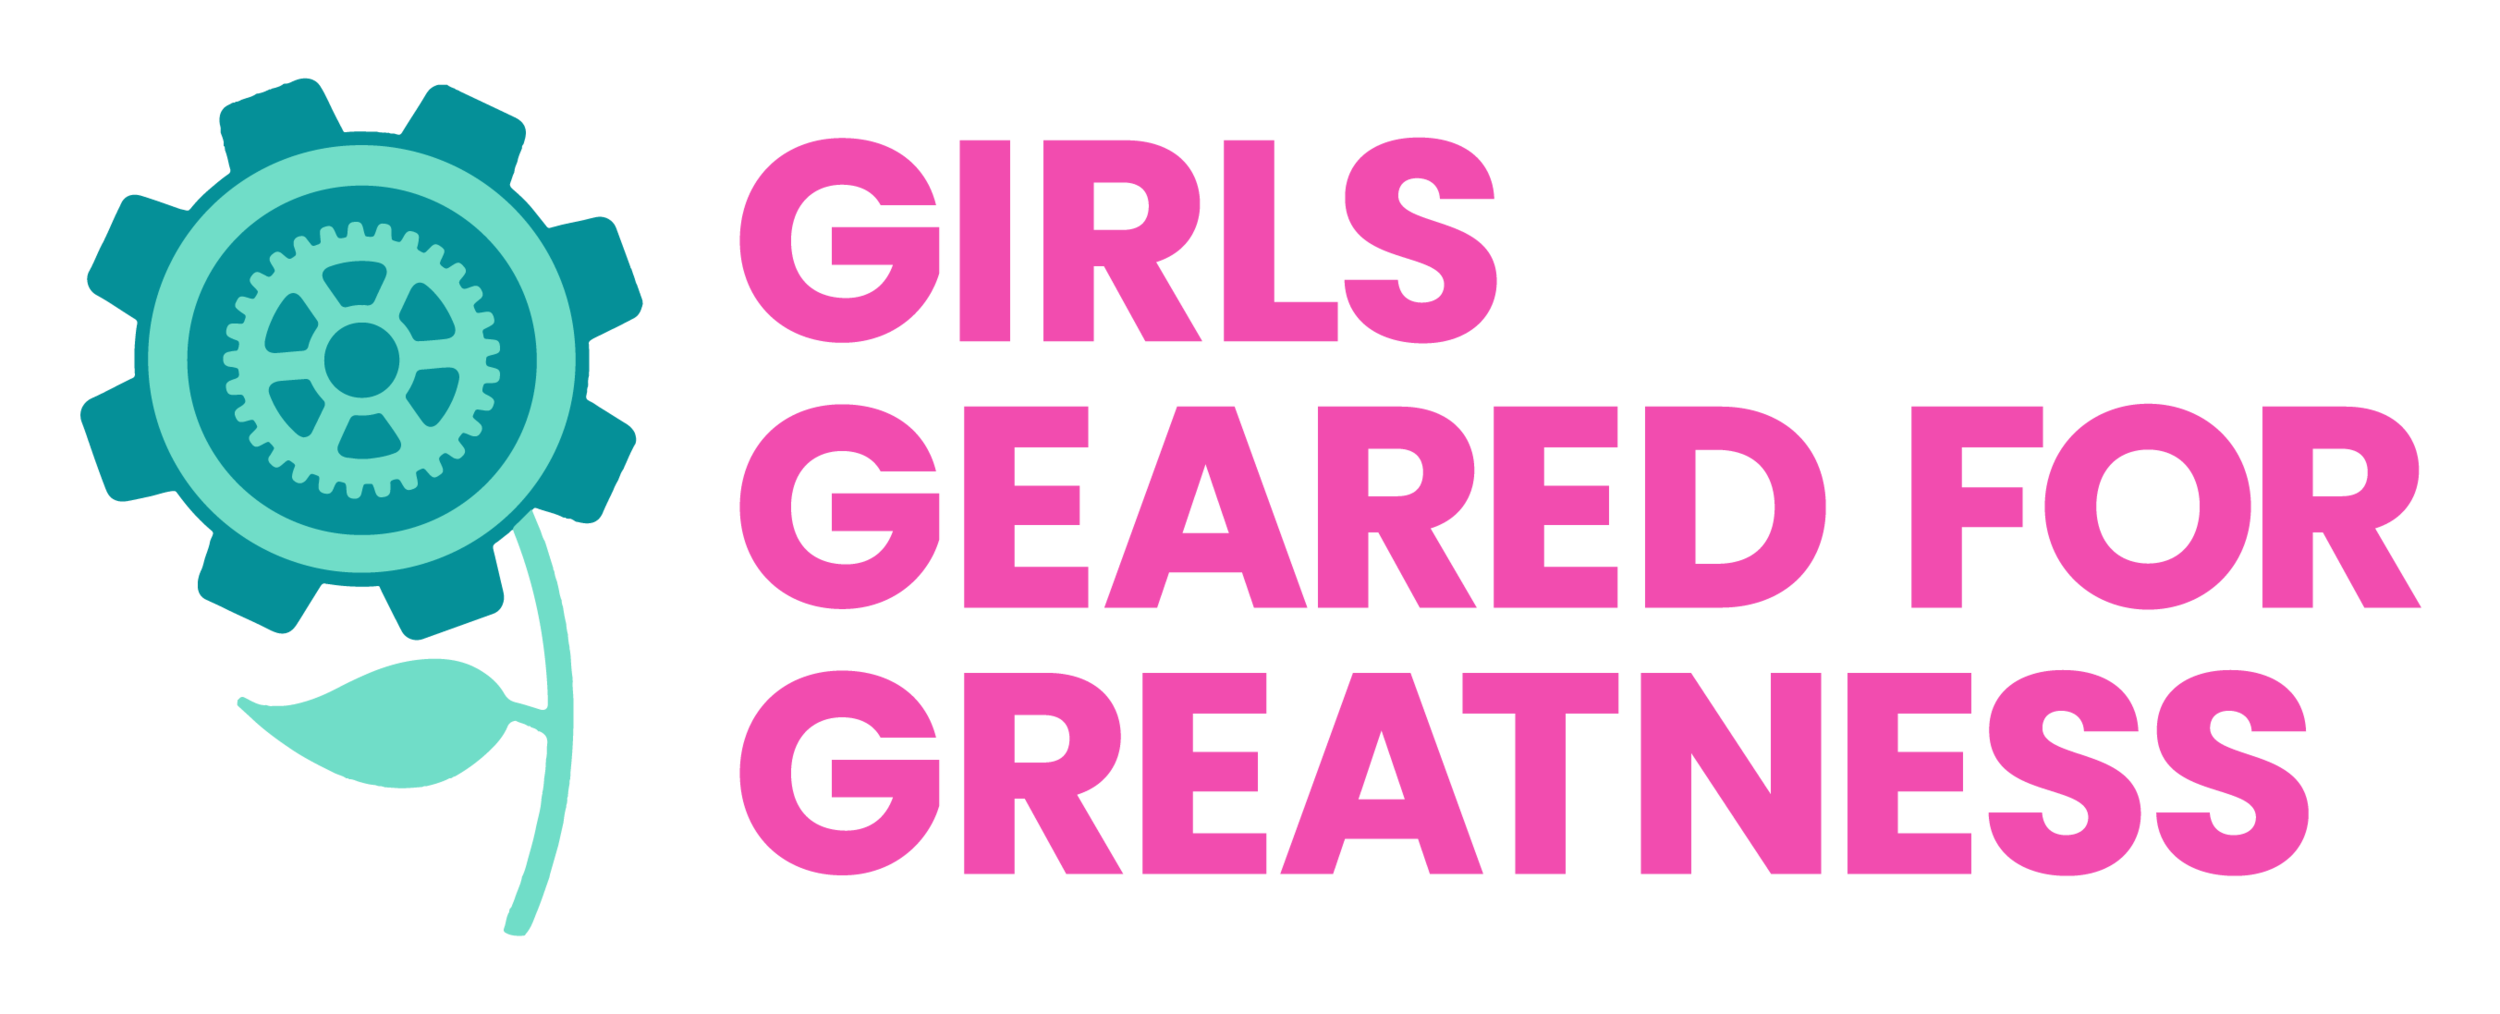 GirlsGearedForGreatness_WebsiteLogo.png